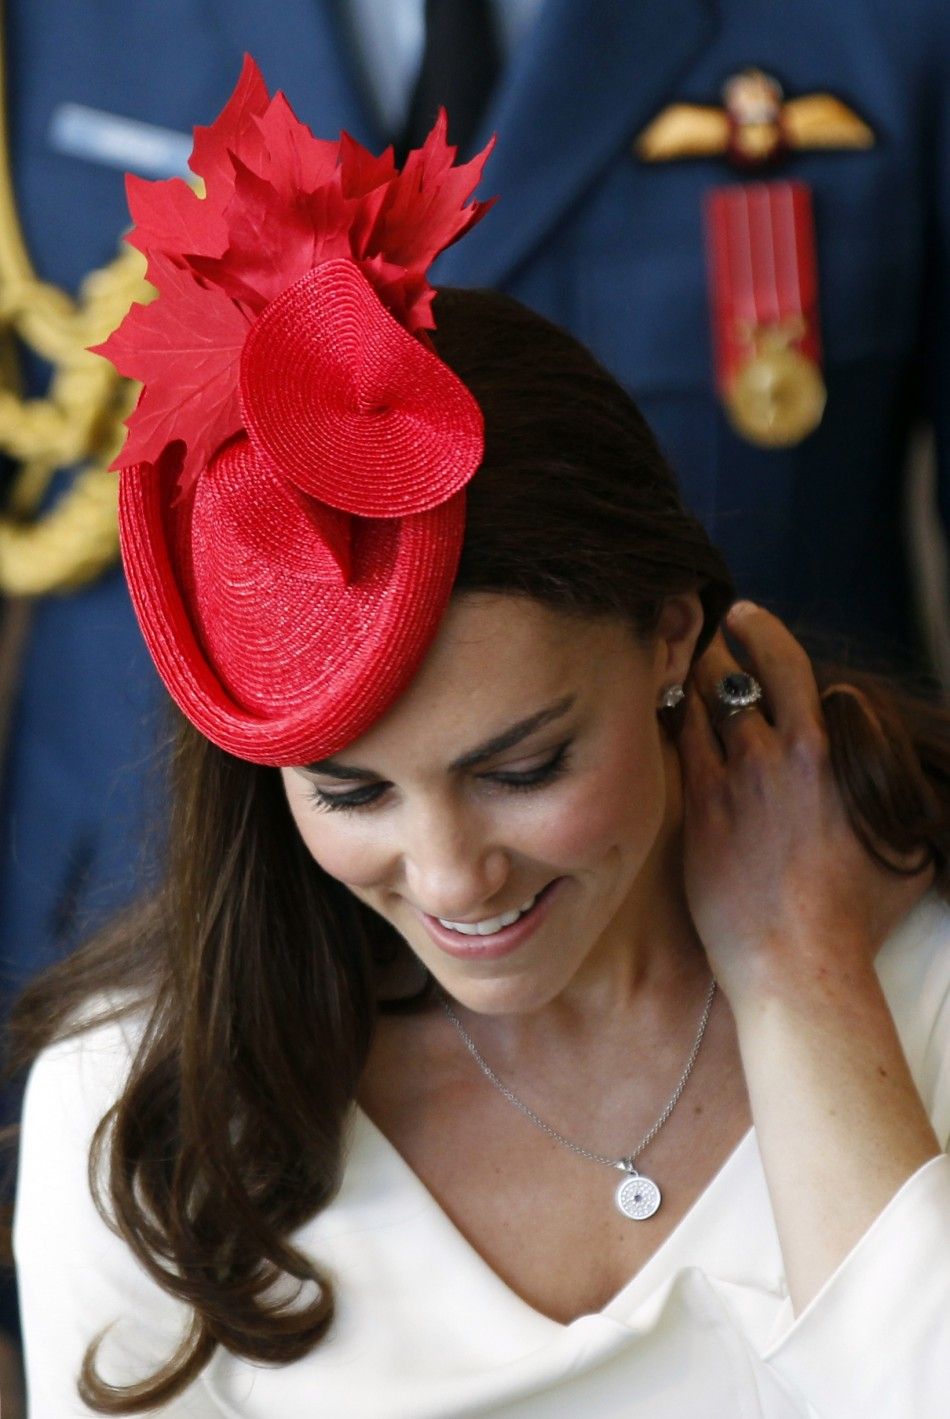 Stunning Kate Middleton celebrates Canada Day in Reiss dress.